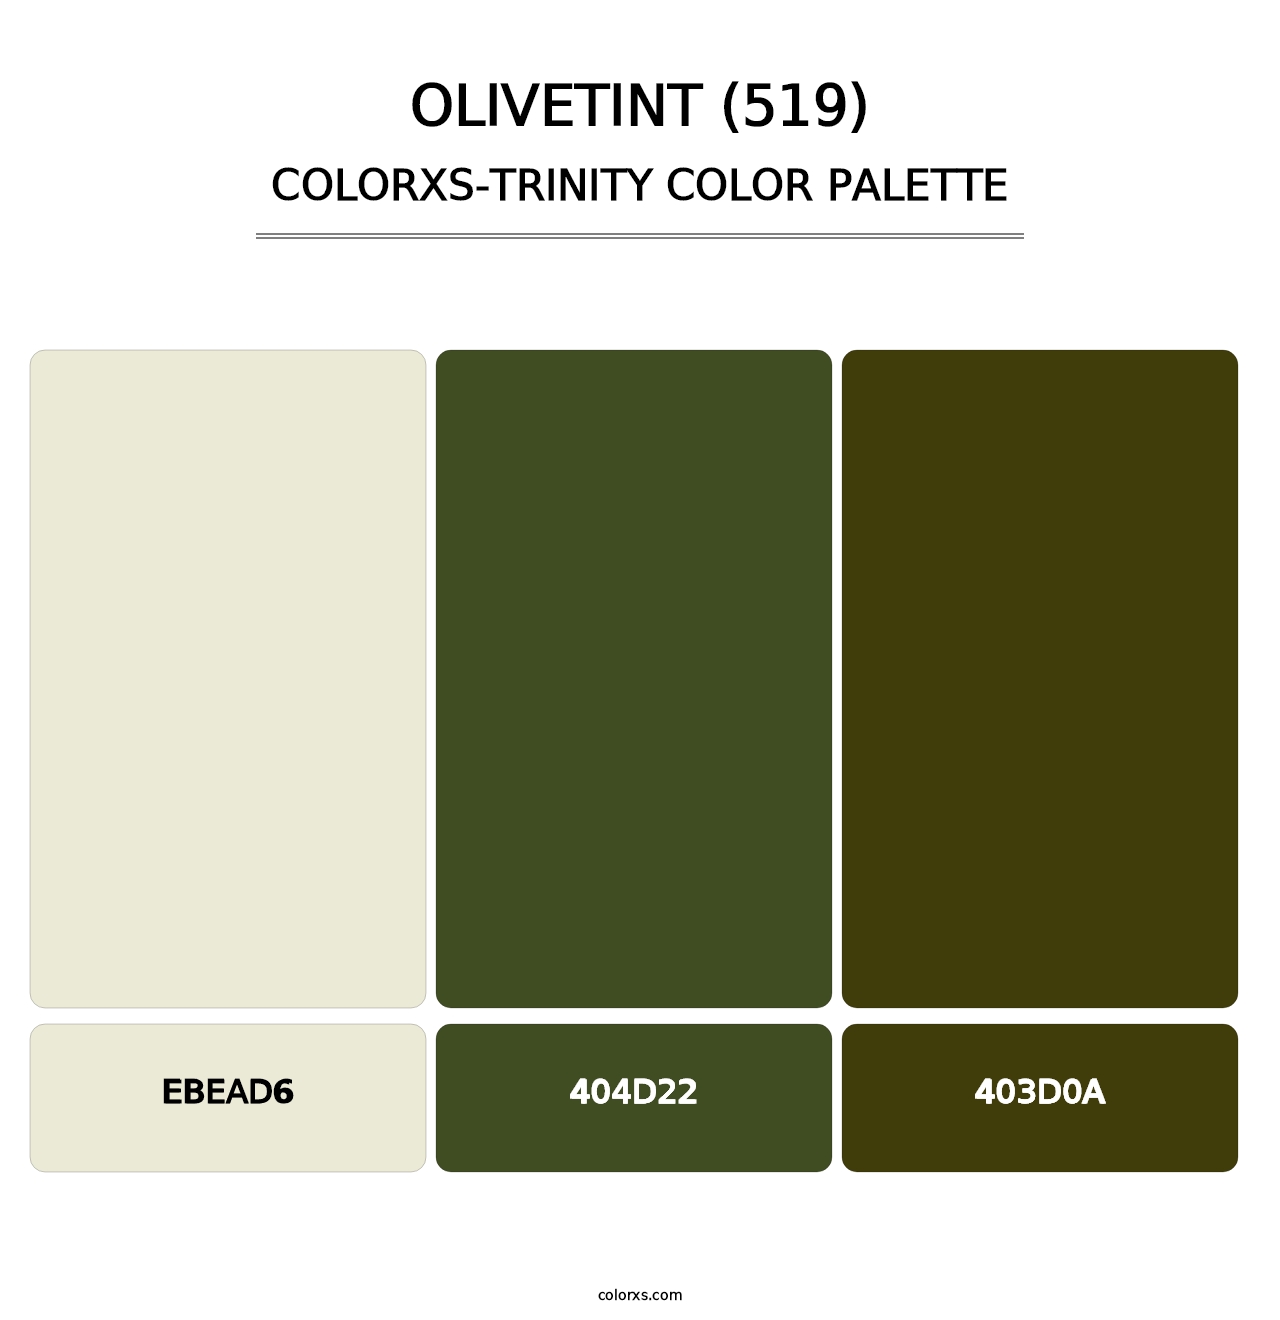 Olivetint (519) - Colorxs Trinity Palette